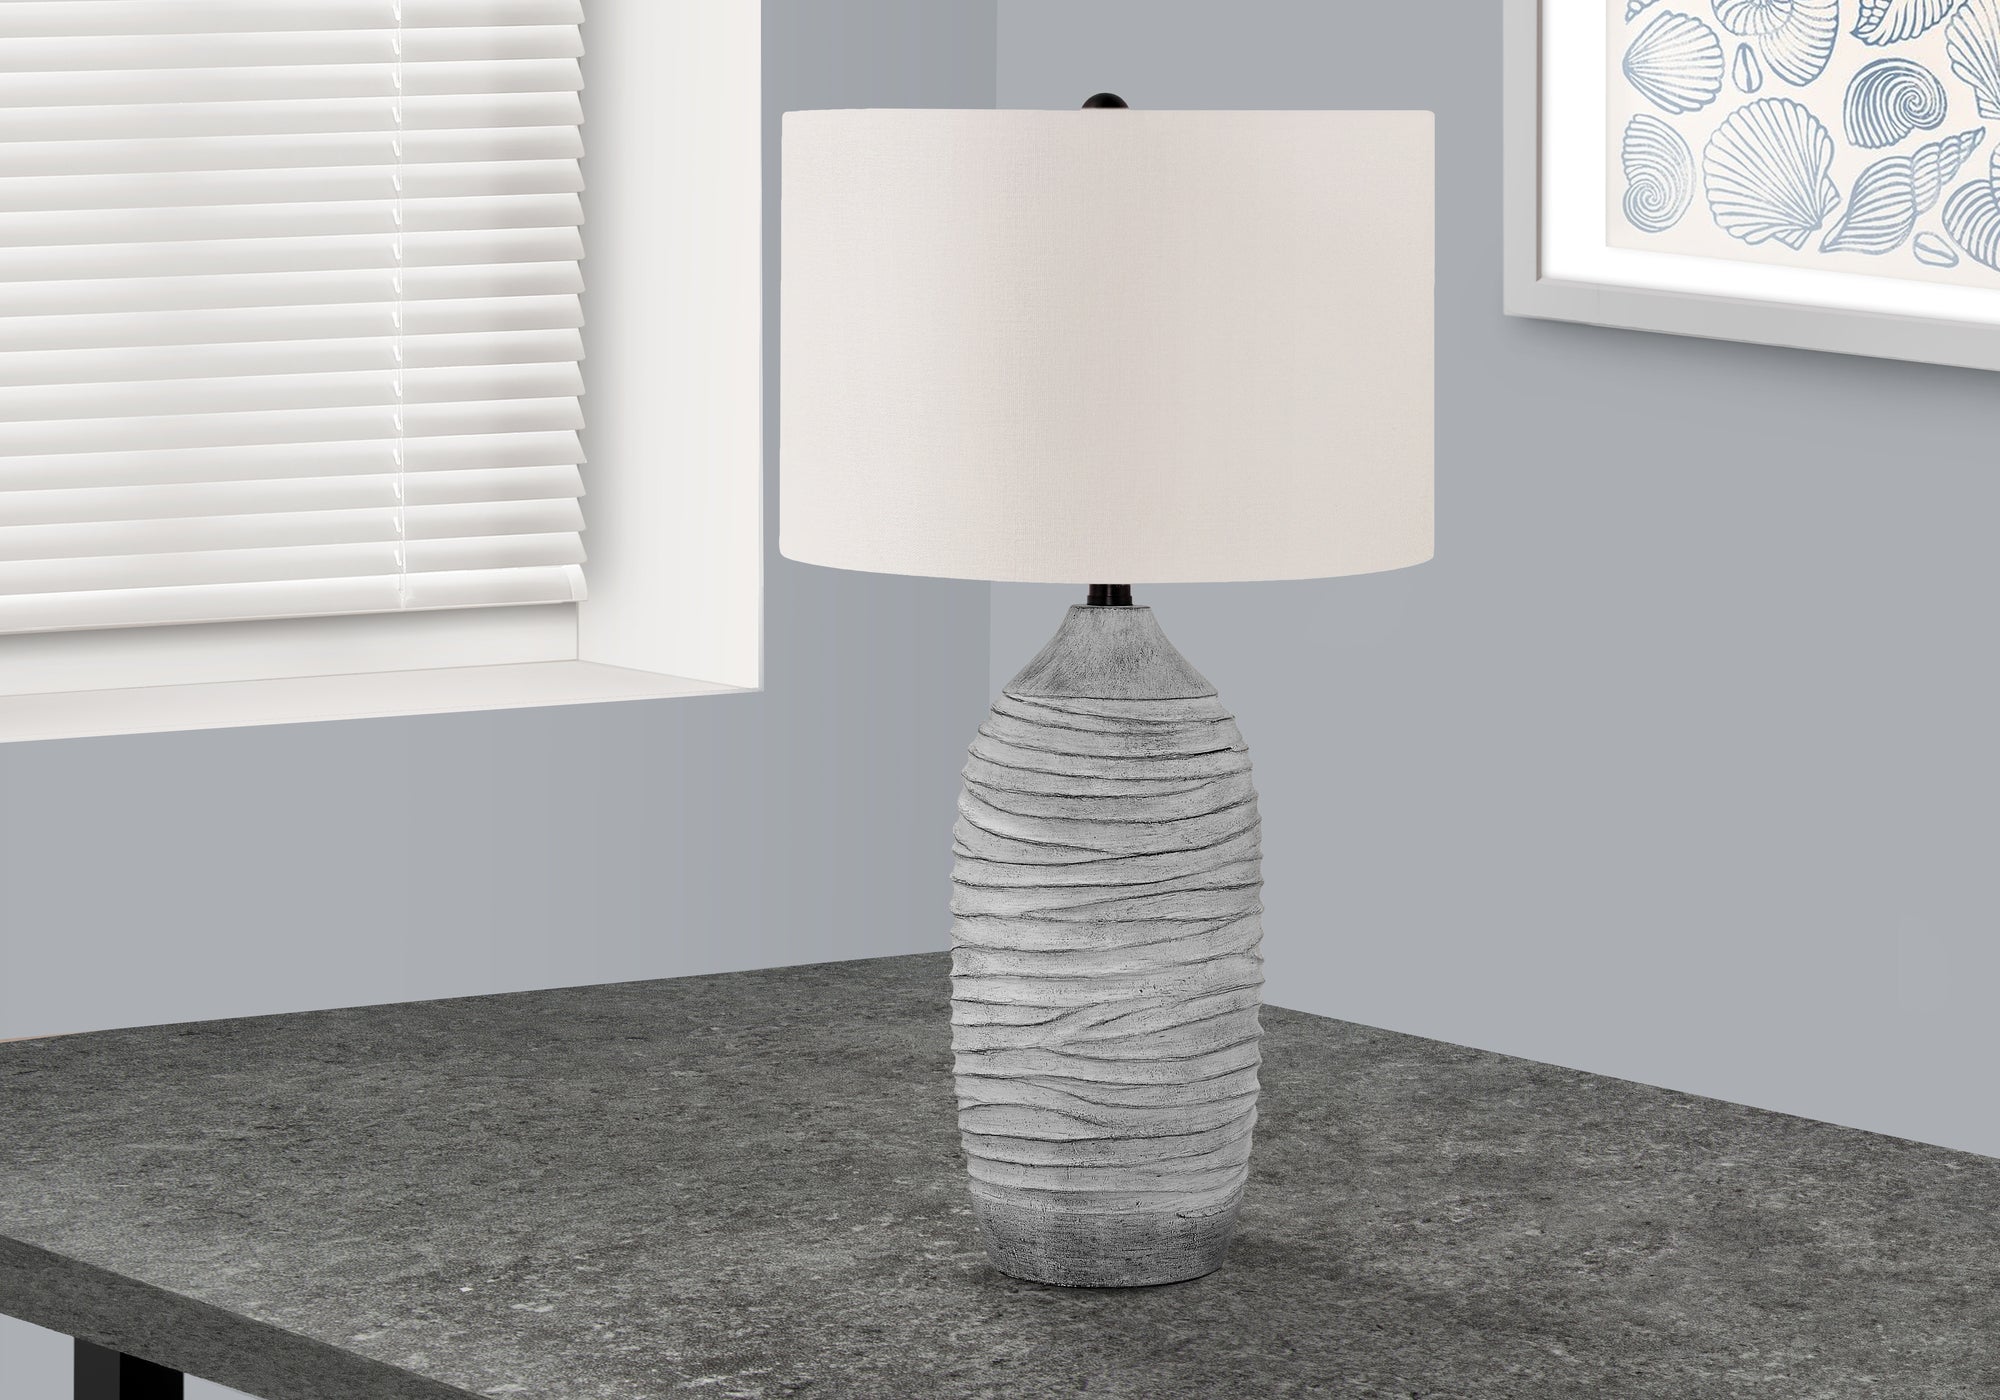 MN-579723    Lighting, 27"H, Table Lamp, Grey Resin, Ivory / Cream Shade, Modern